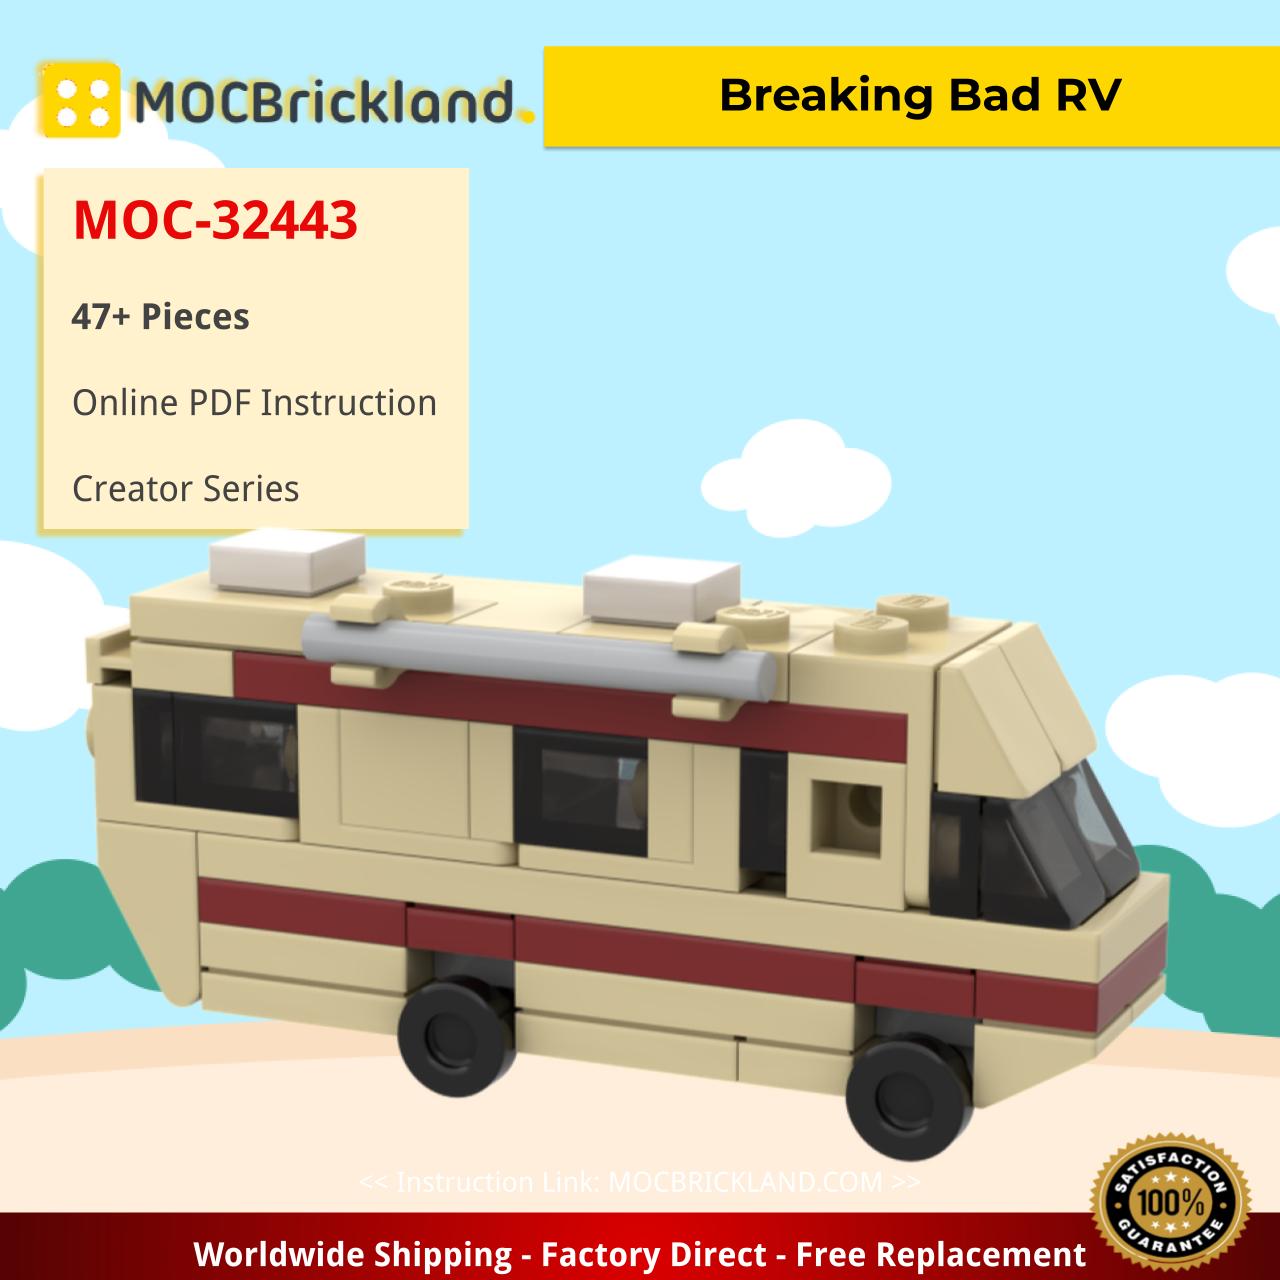 MOCBRICKLAND MOC-32443 Breaking Bad RV